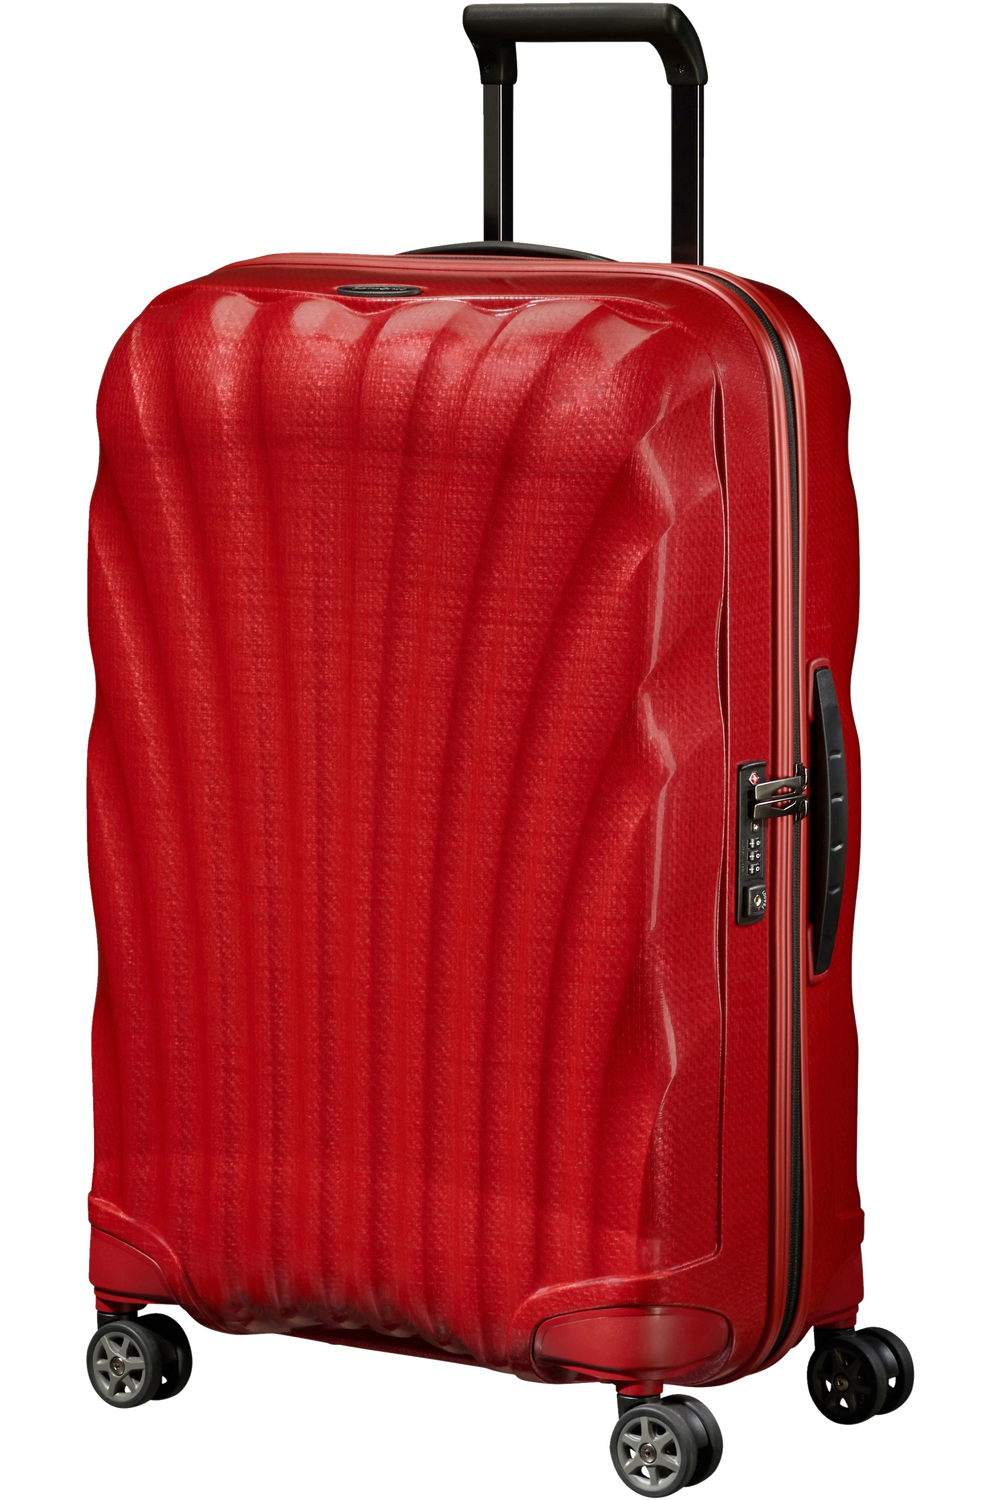 Koffert | Curv materiale | Medium | Chili rød | 4 Hjul | 2,5 Kg | 10 Års Garanti | C-LITE SPINNER 55/20